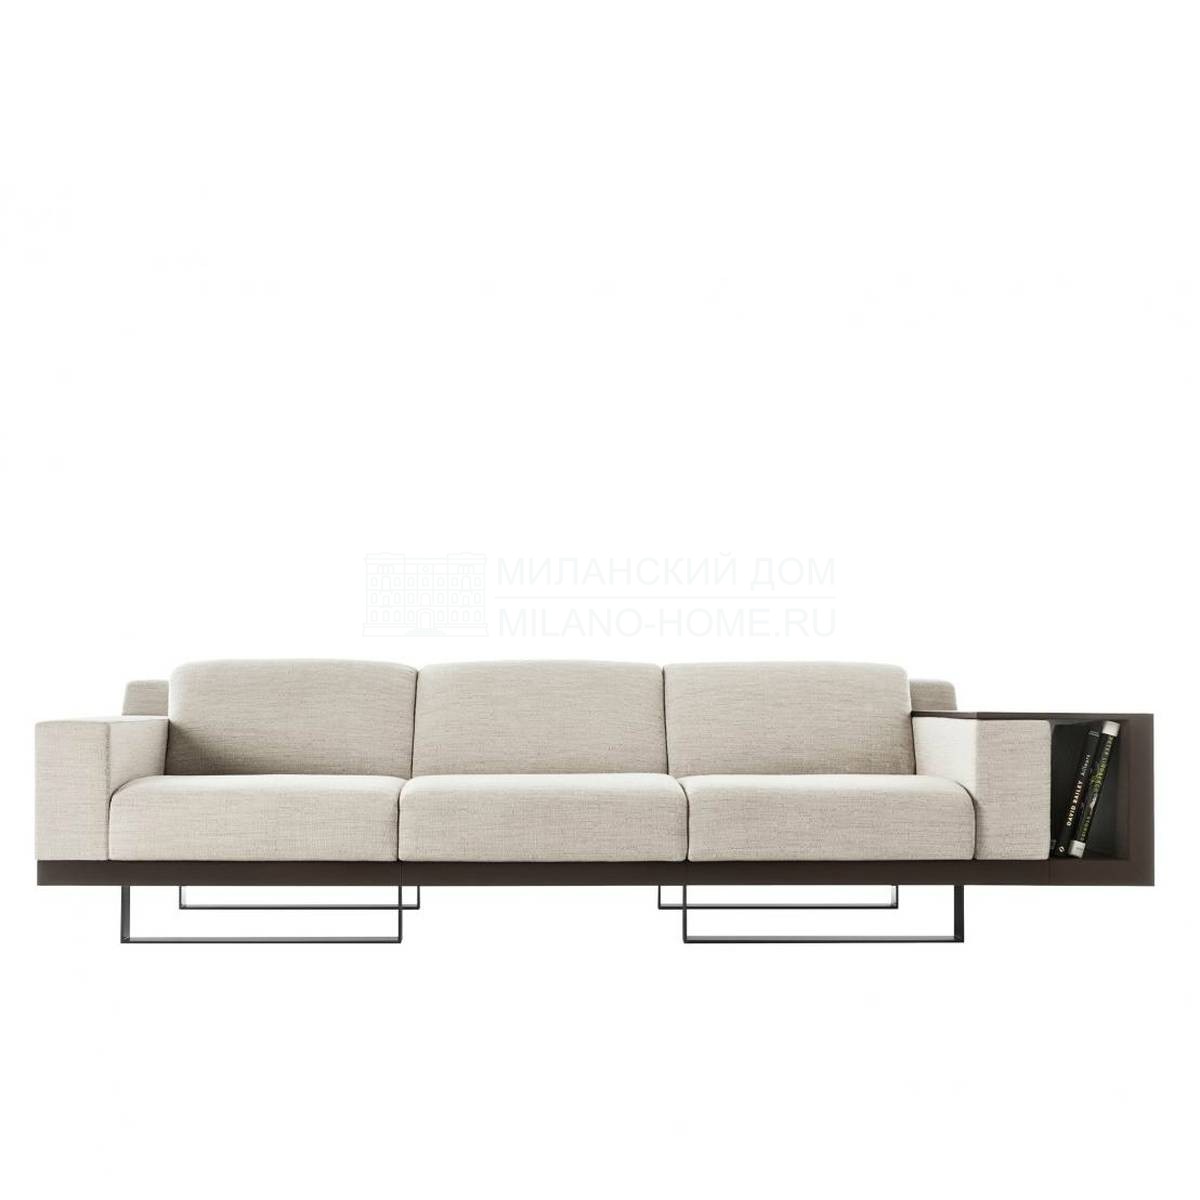 Прямой диван Corte Nova Sofa III New из Италии фабрики RUBELLI Casa